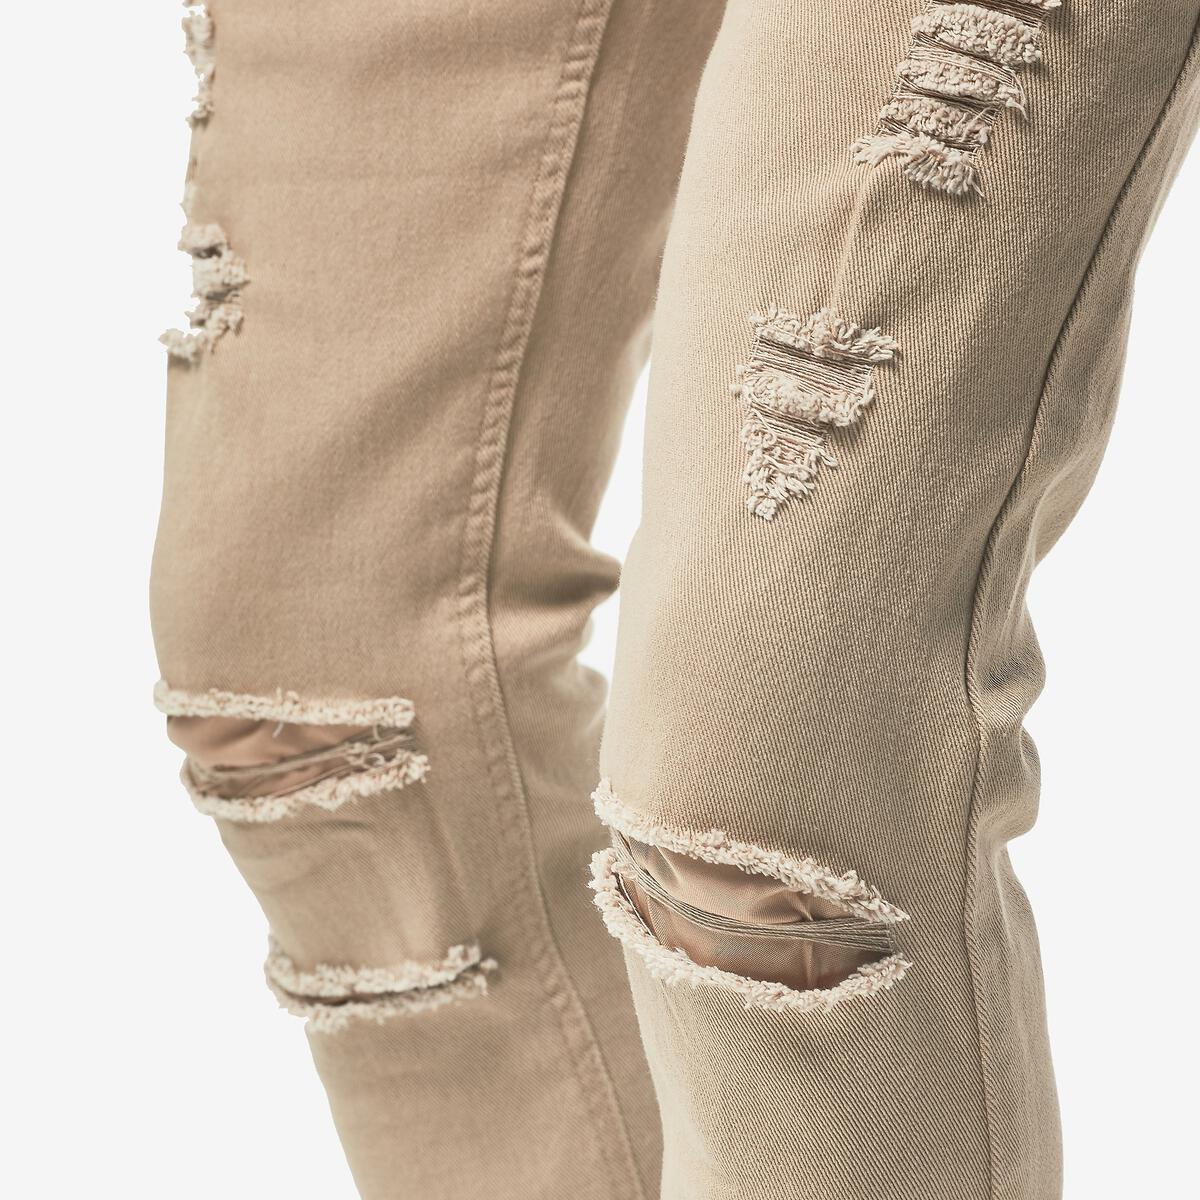 Copper Rivet Twill Pants With Rips Khaki Skinny Jeans